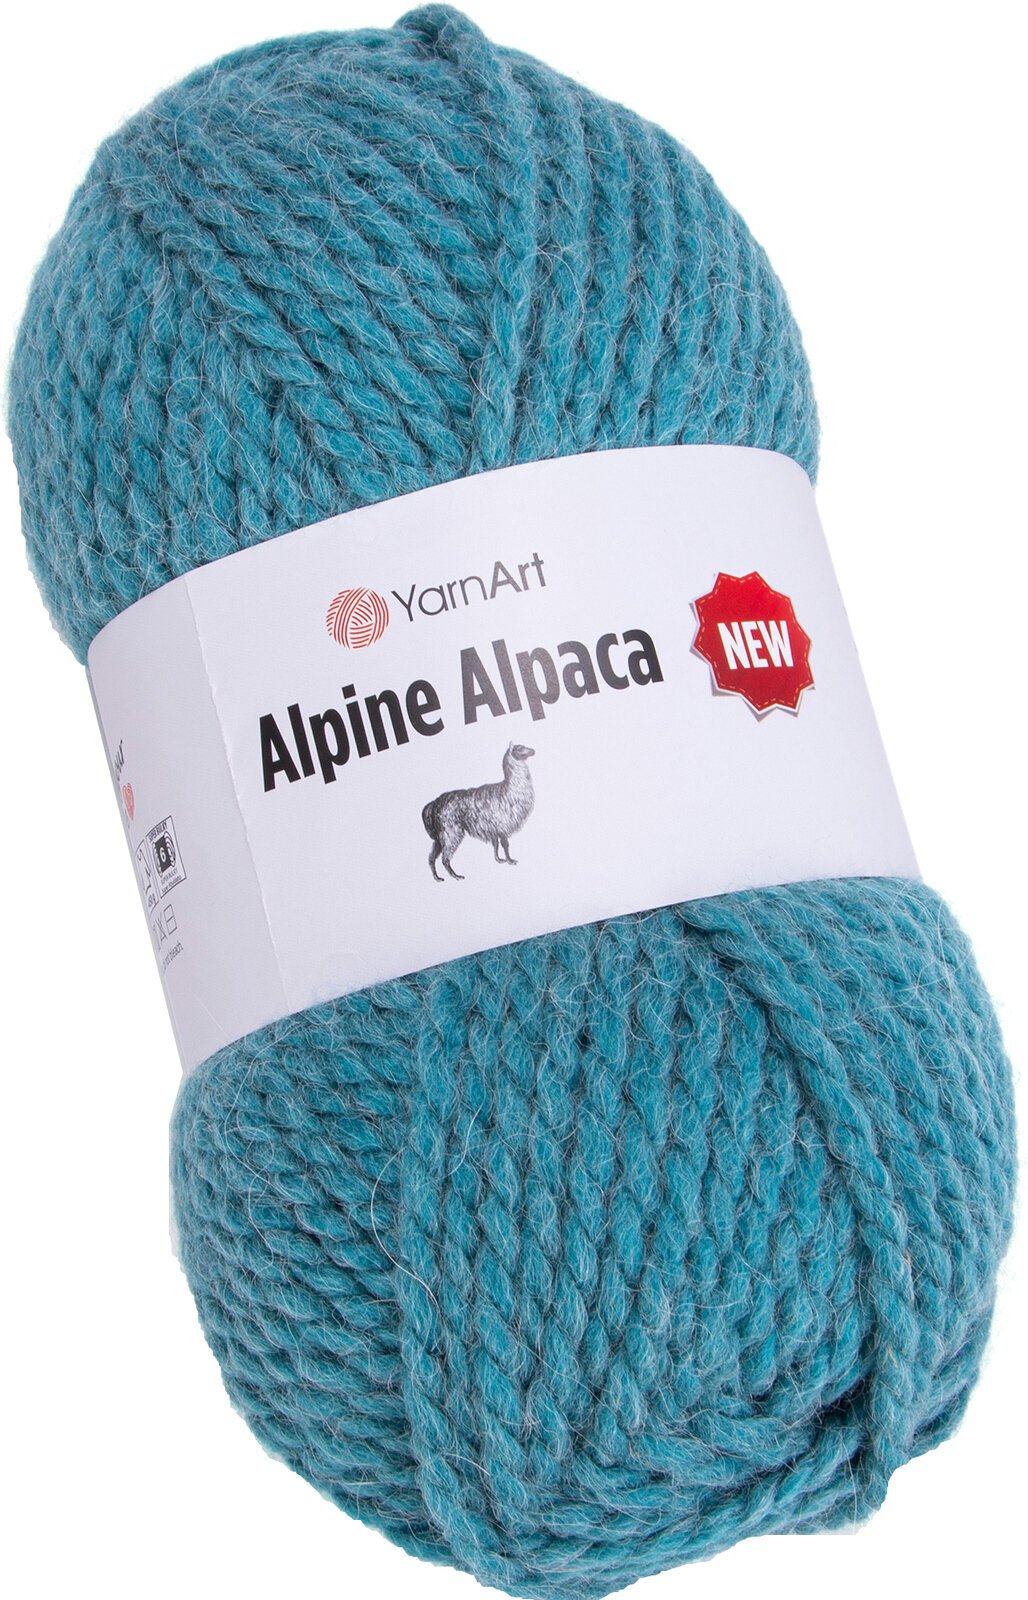 Breigaren Yarn Art Alpine Alpaca New 1450 Breigaren